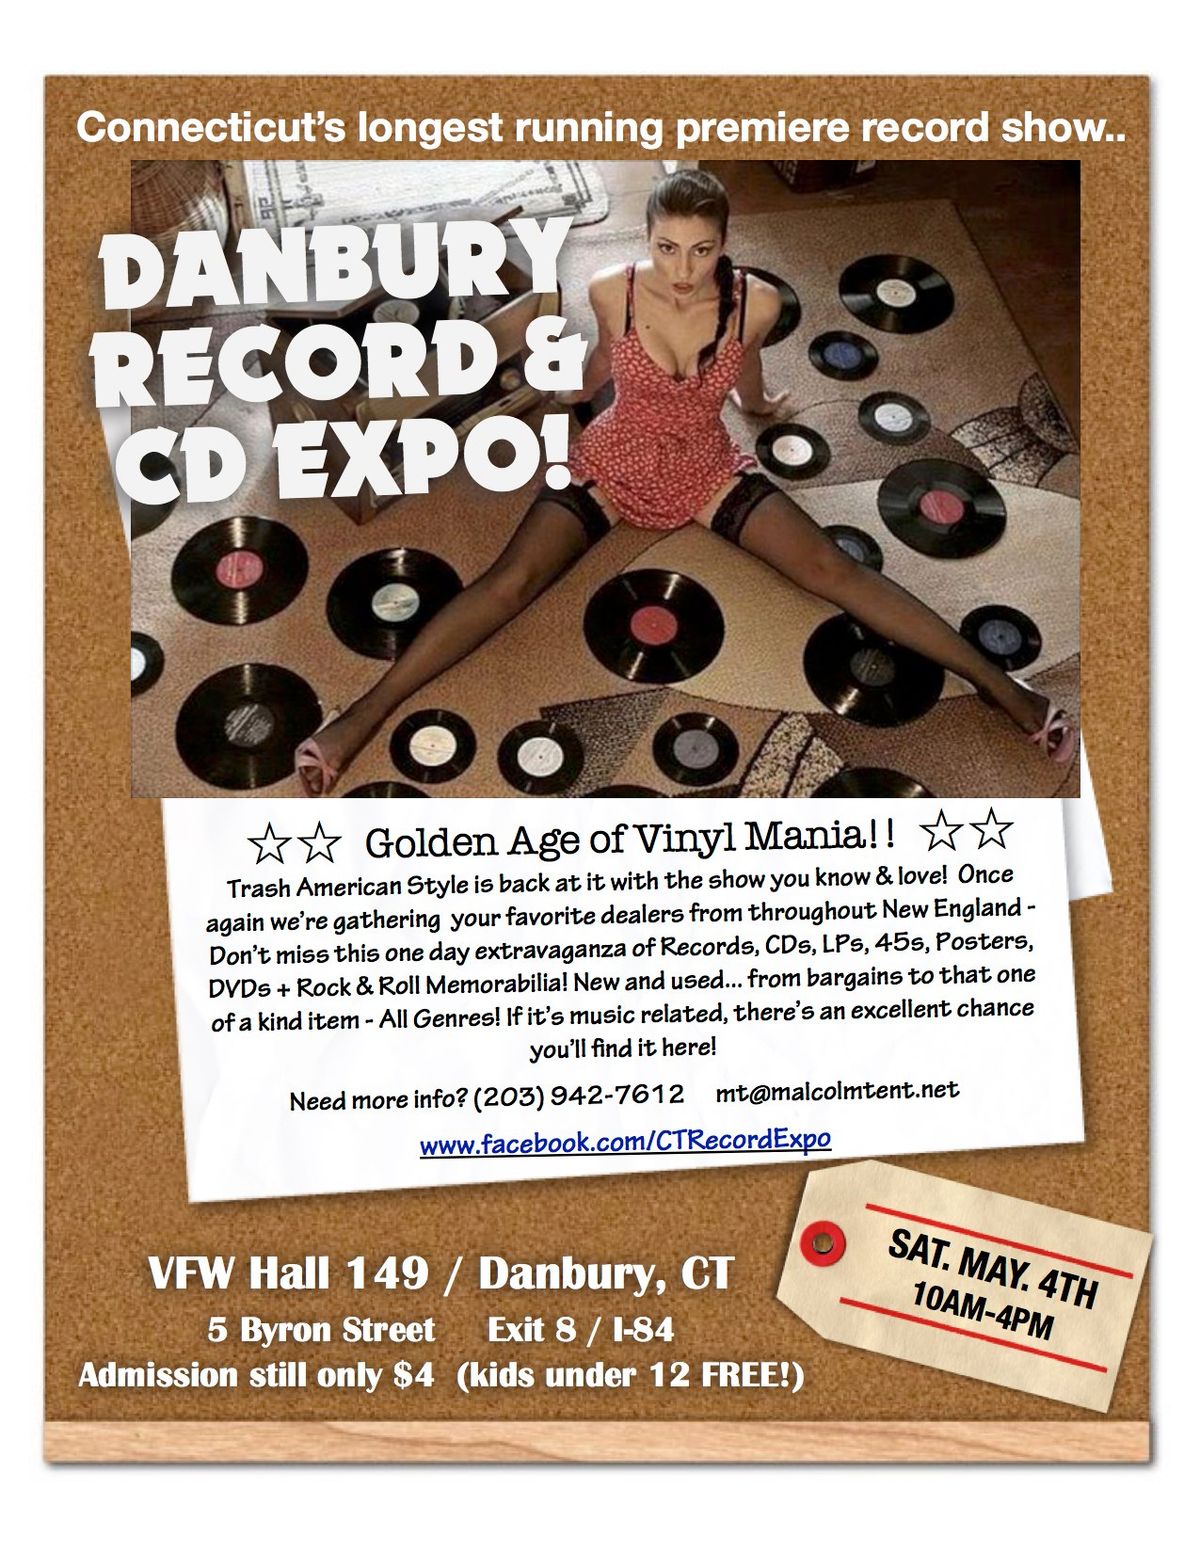 Danbury Spring Record & CD Expo! 